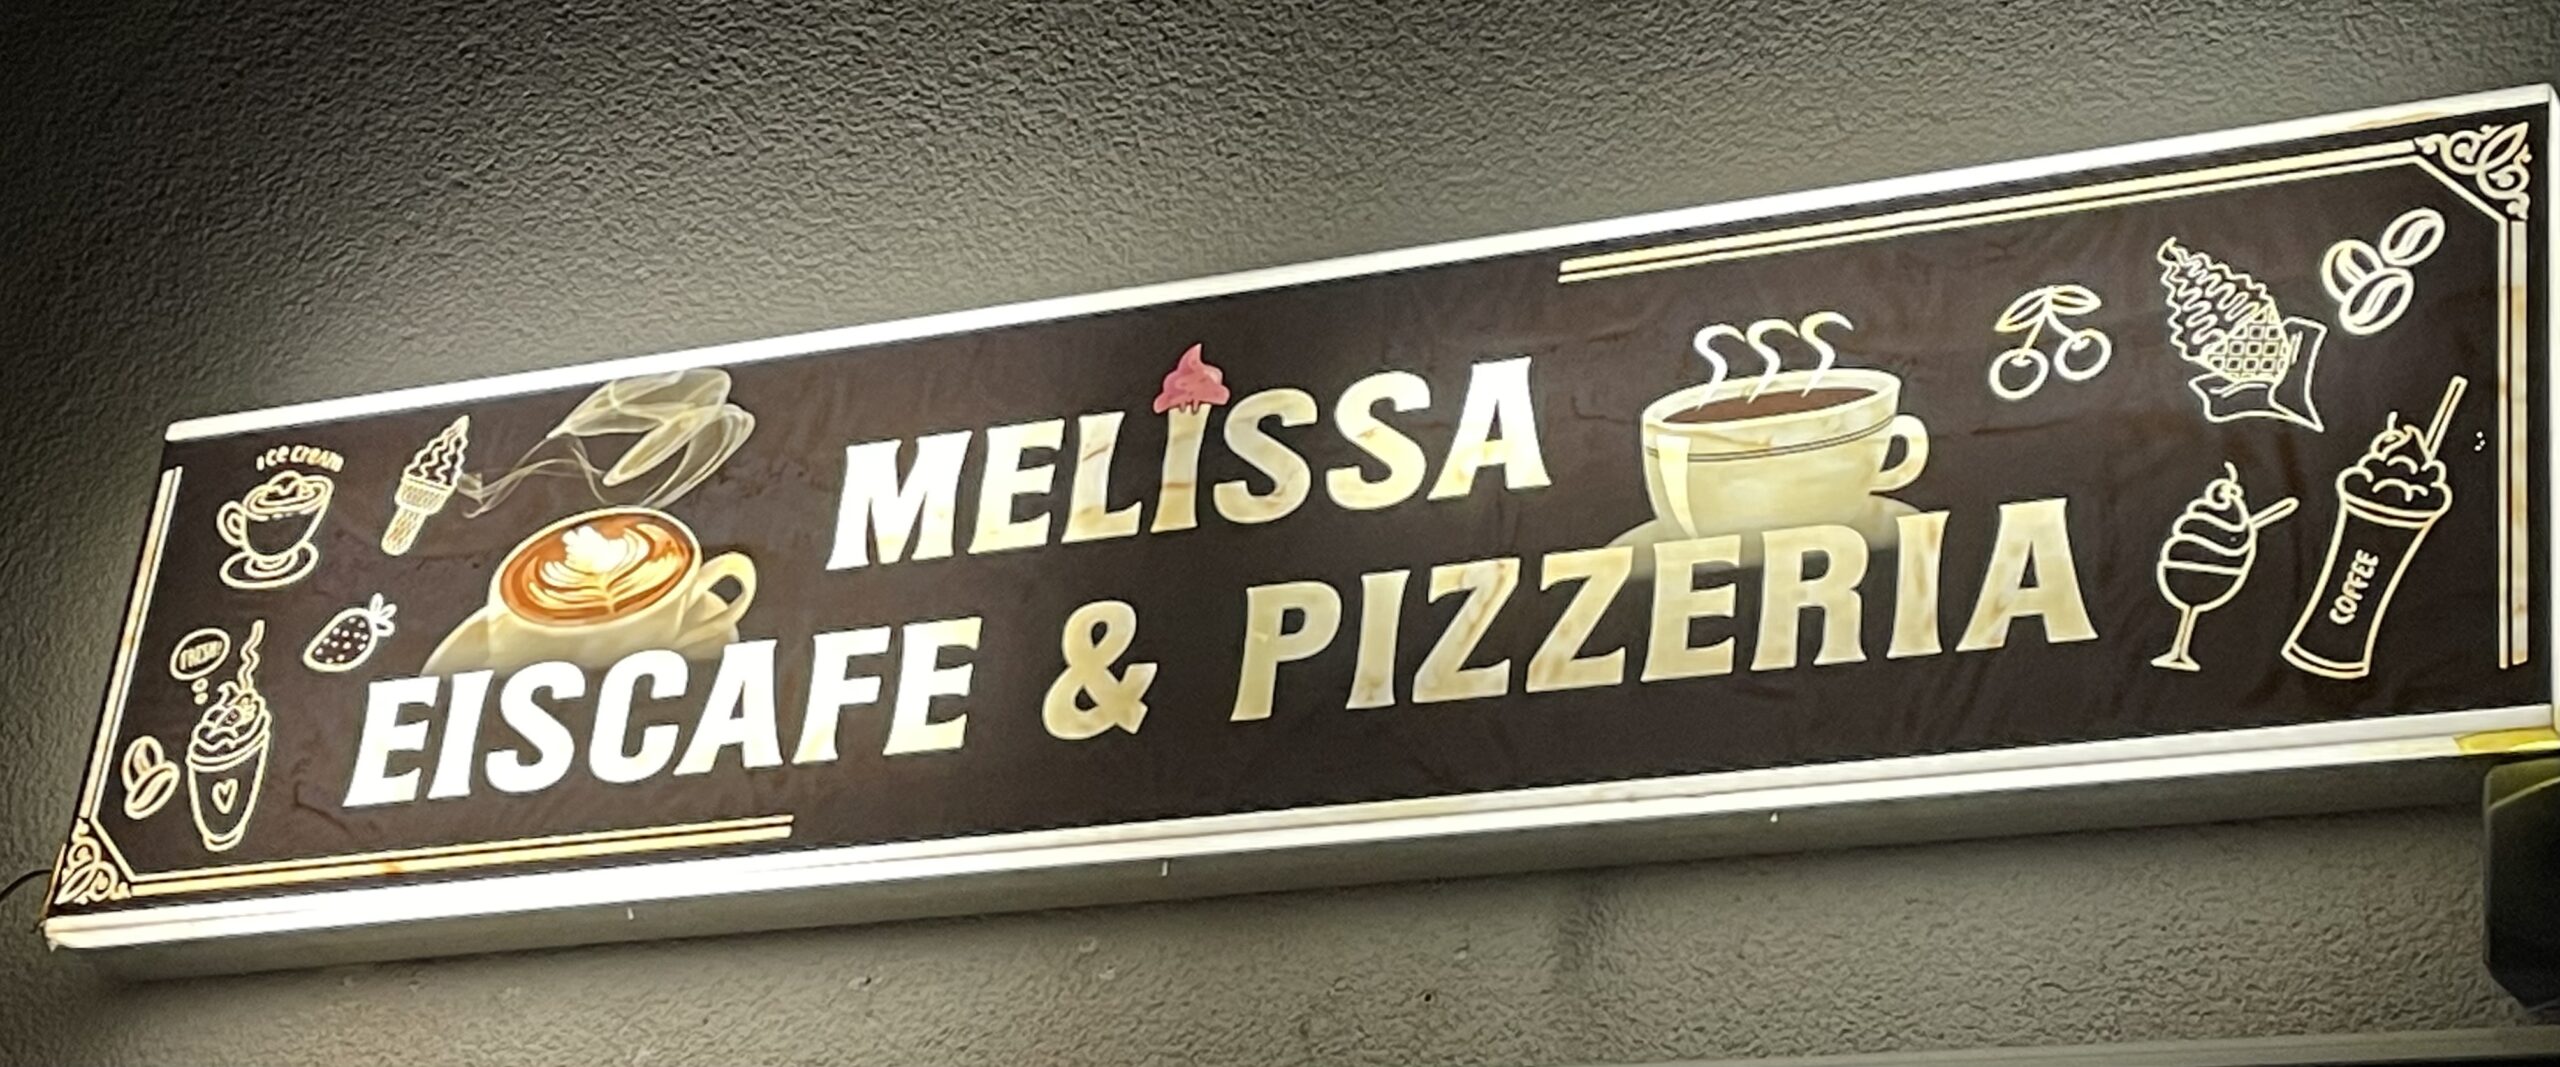 Melissa Eiscafé & Pizzeria